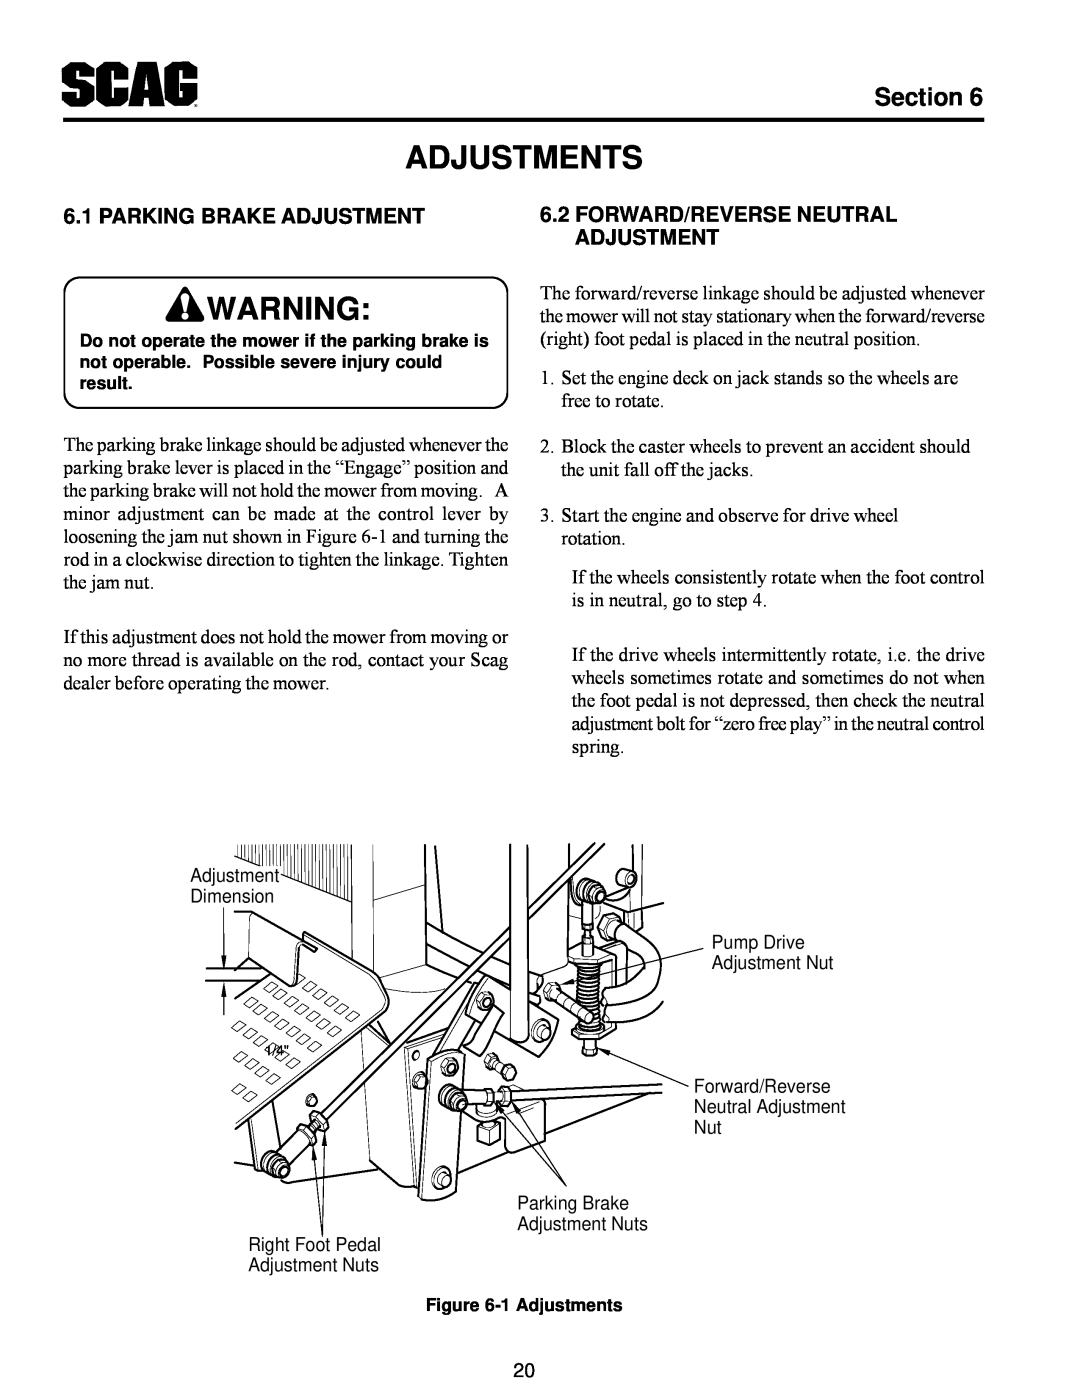 Scag Power Equipment MAG manual Adjustments, Parking Brake Adjustment, Forward/Reverse Neutral Adjustment, Section 